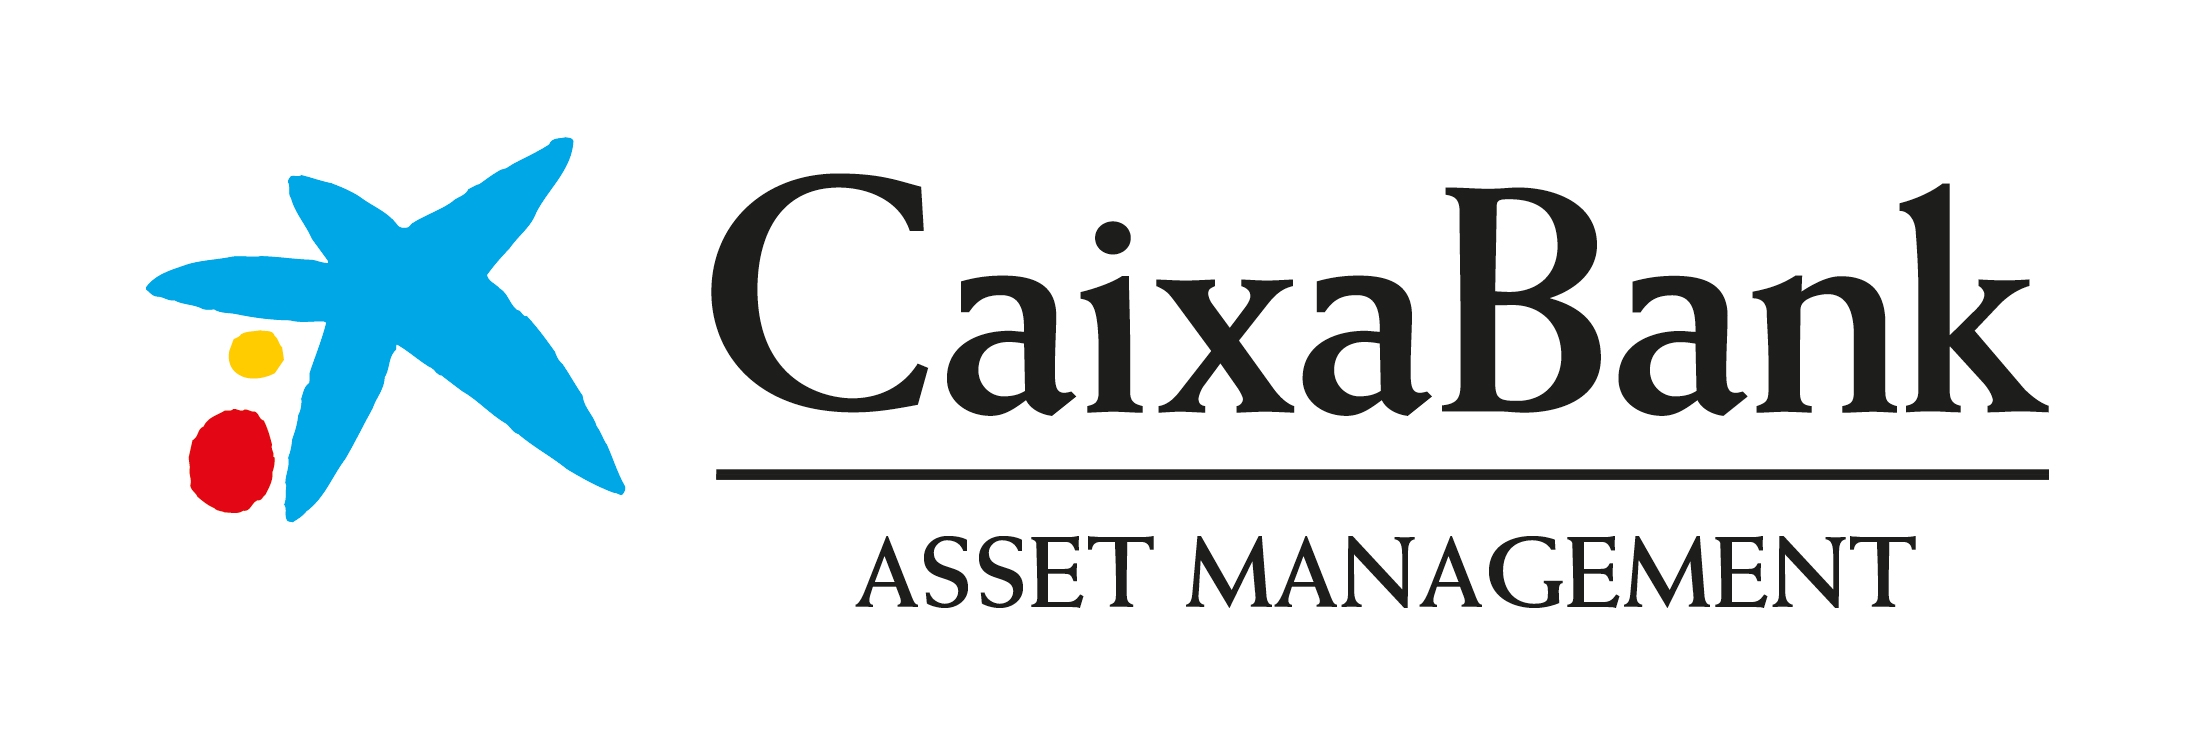 CaixaBank_AssetManagement_logo_color_CMYK_horizontal_300dpi_fondo_blanco.jpeg